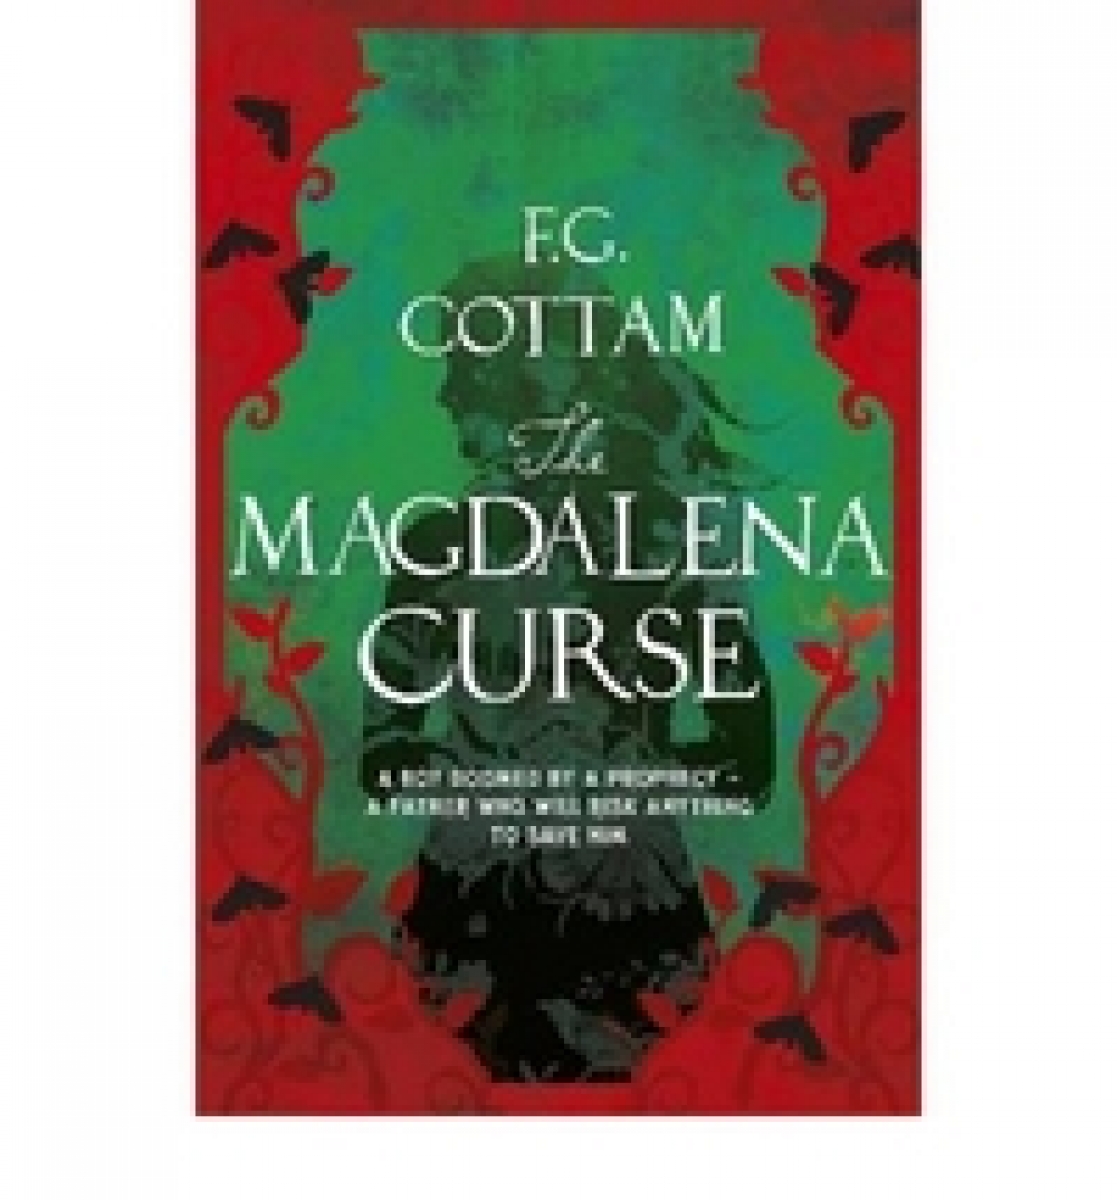 F G Cottam The Magdalena Curse 